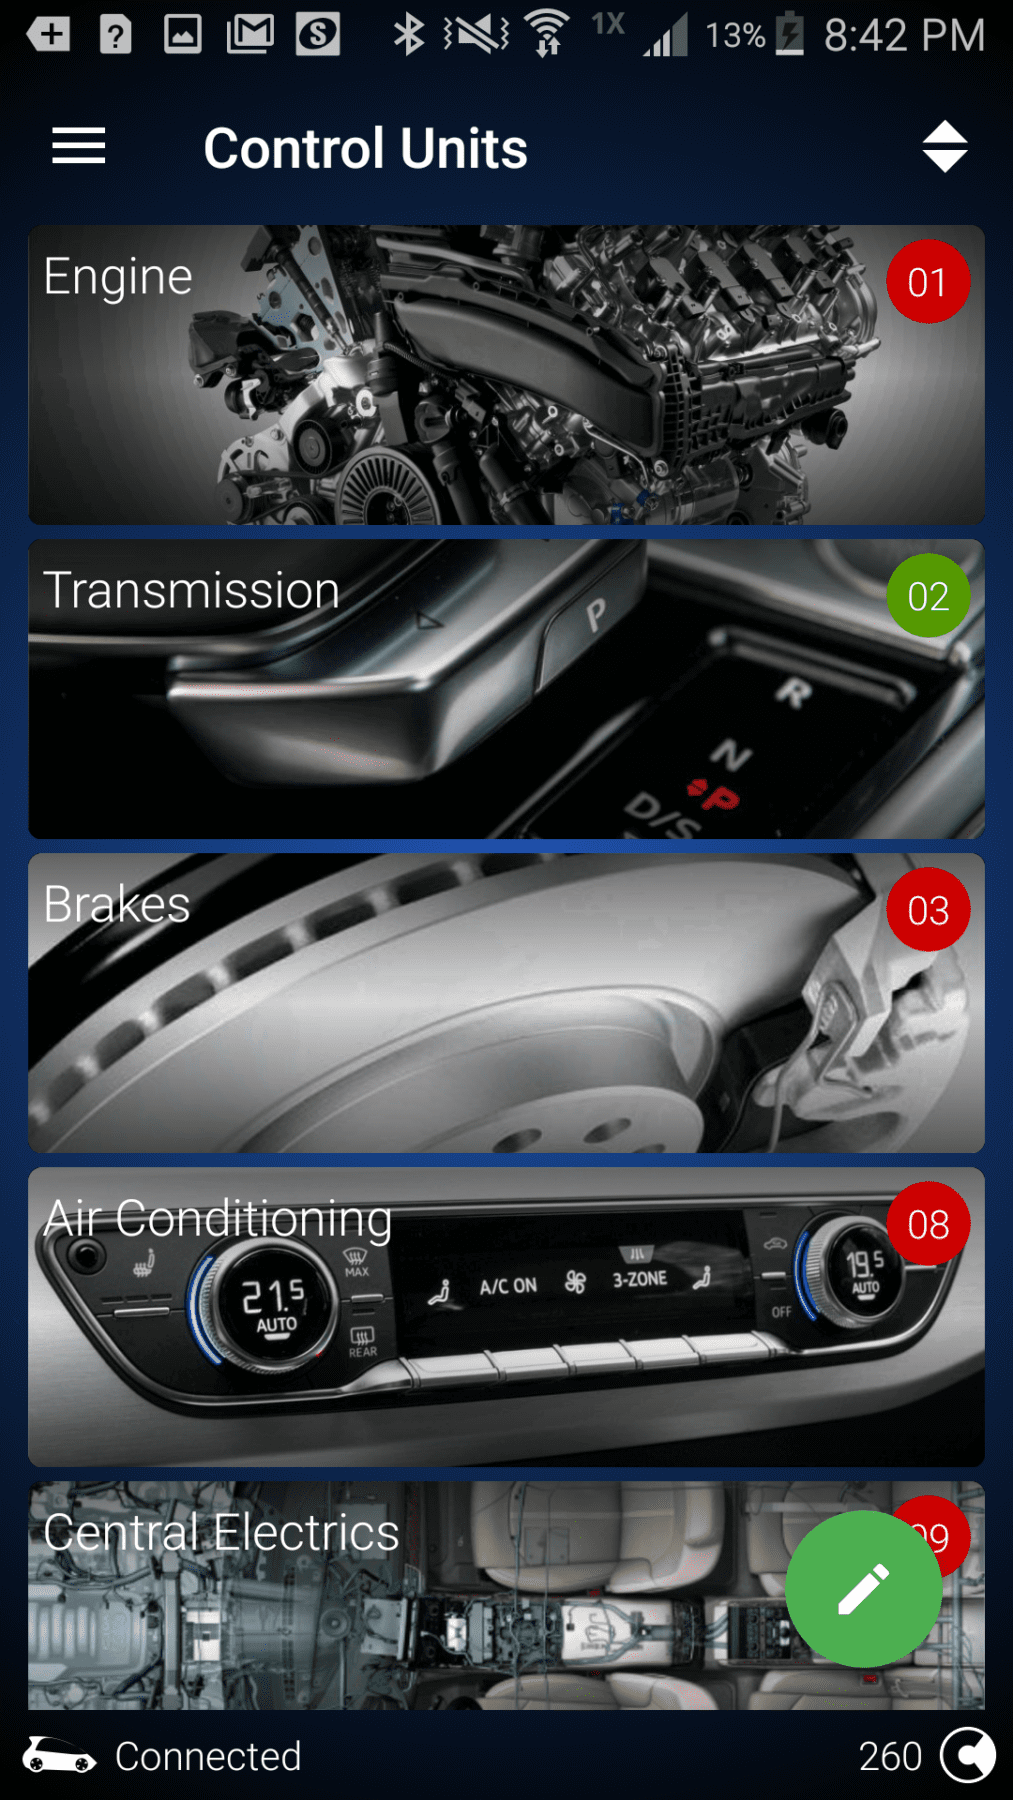 VW MK7.1 OBDEleven Control Units in app